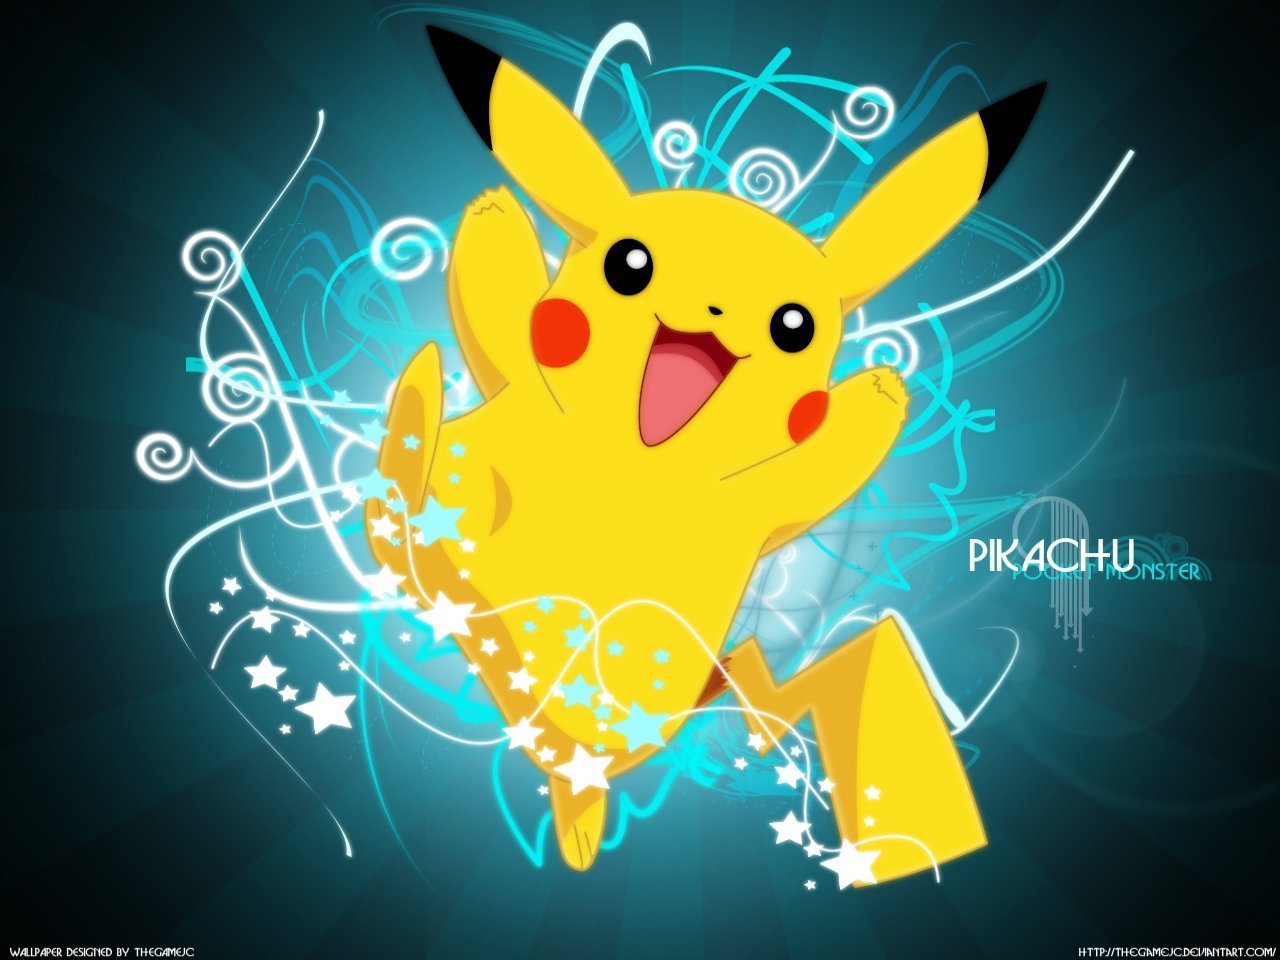  for pc desktop wallpaper download amazing pikachu pokemon for pc